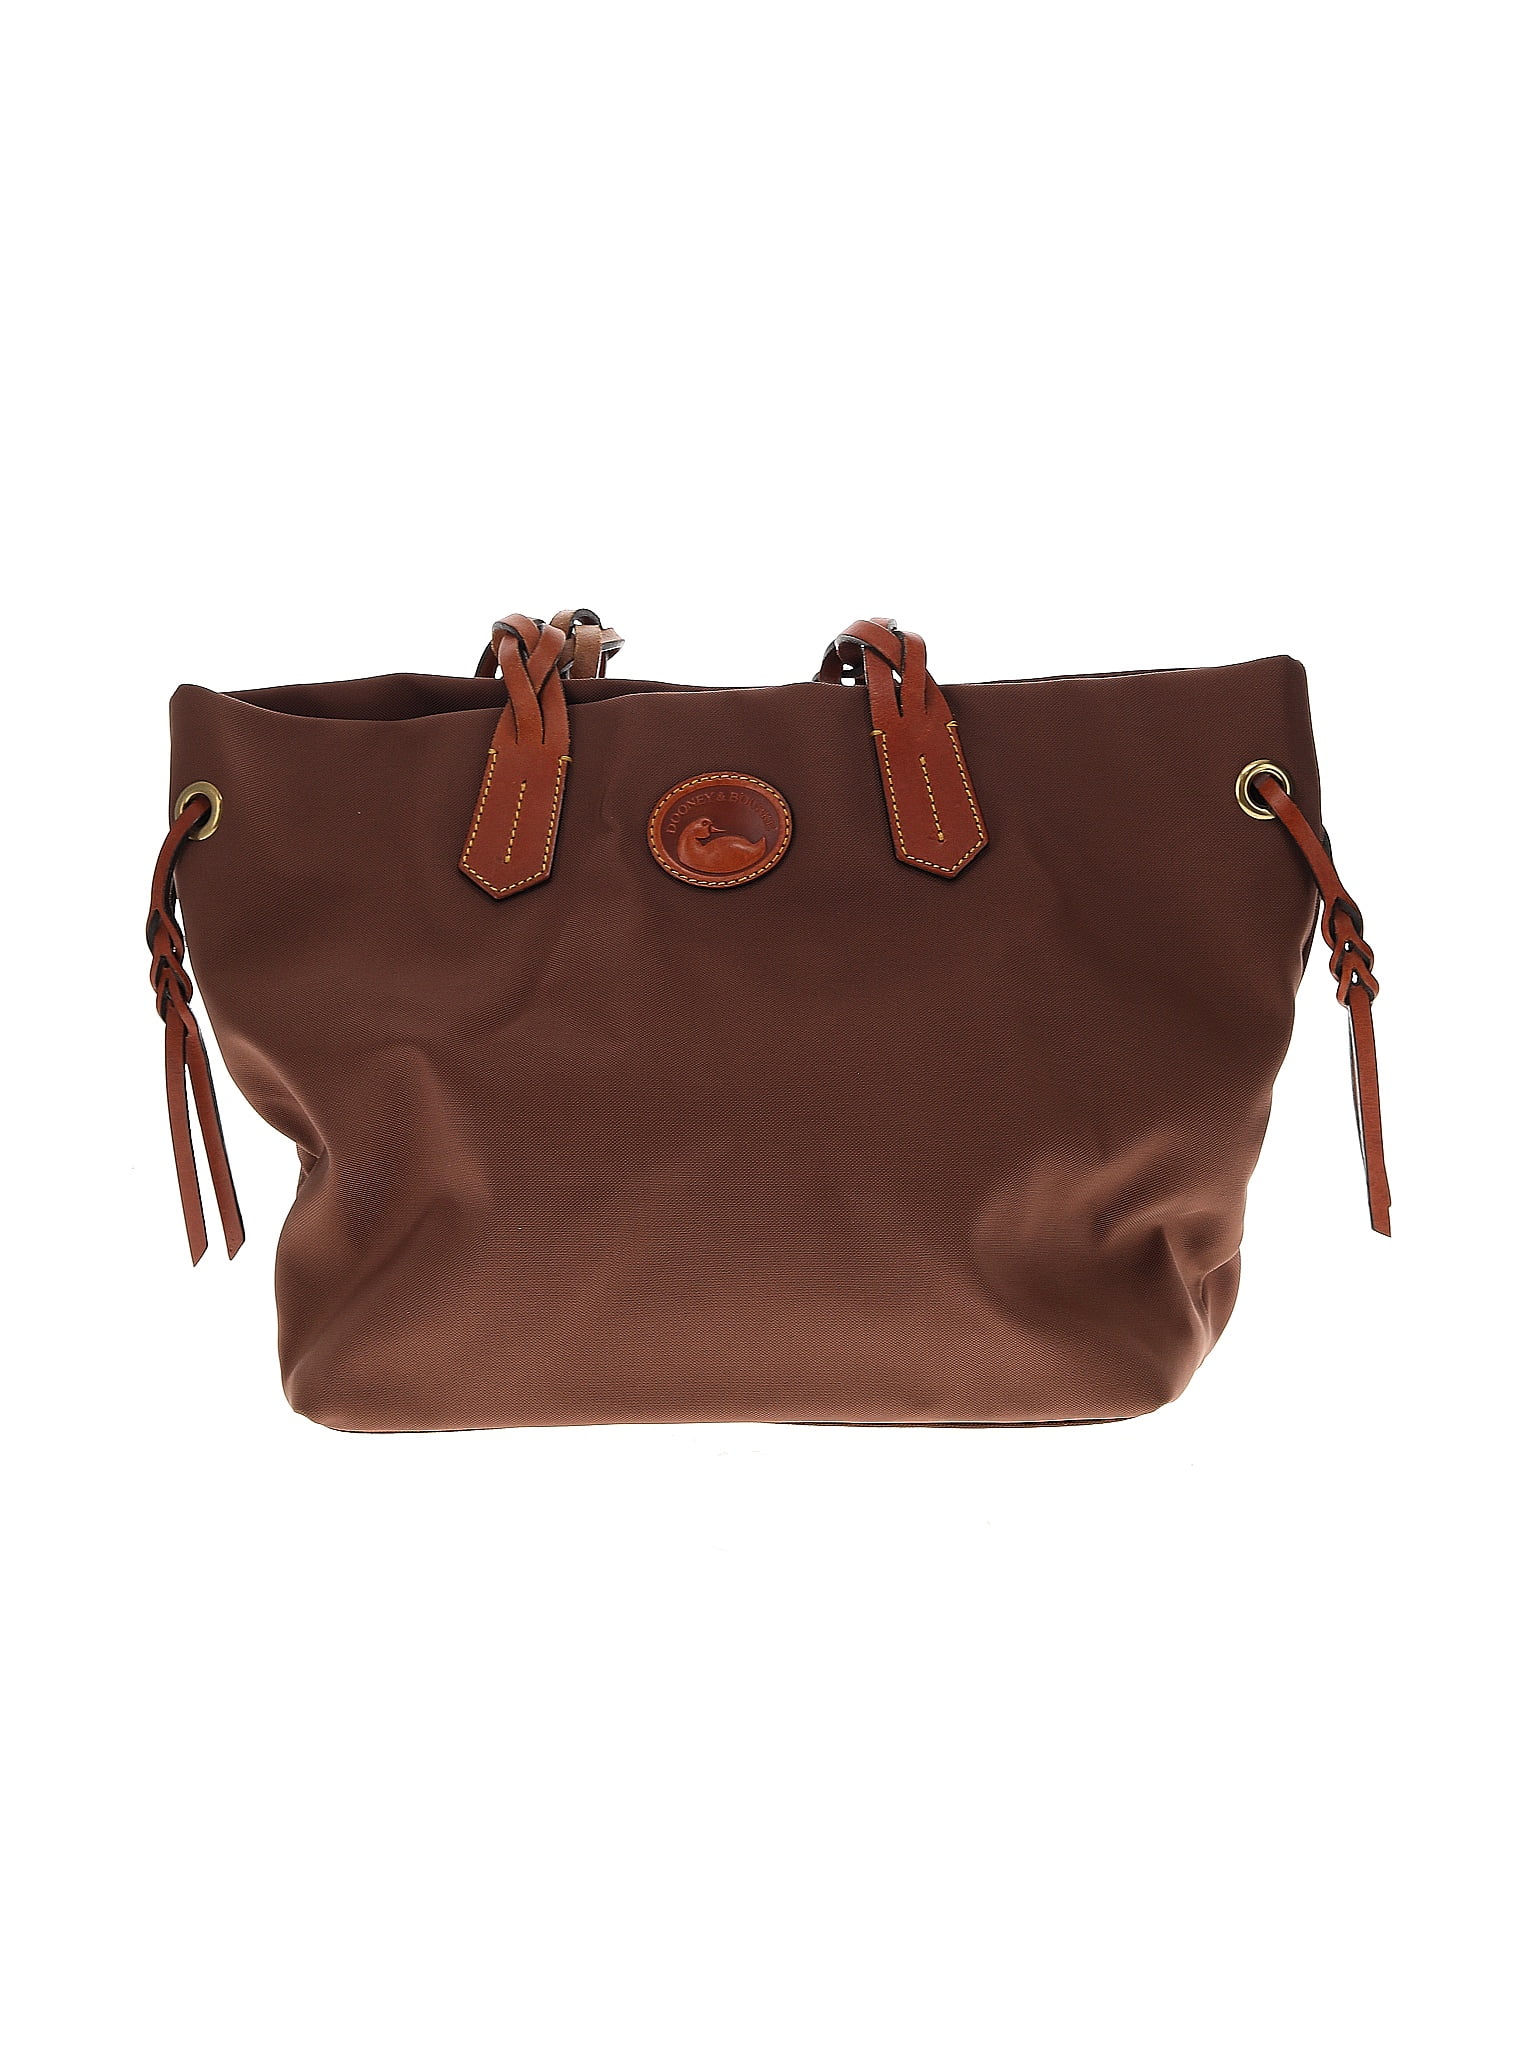 Dooney & Bourke Handbags On Sale Up To 90% Off Retail